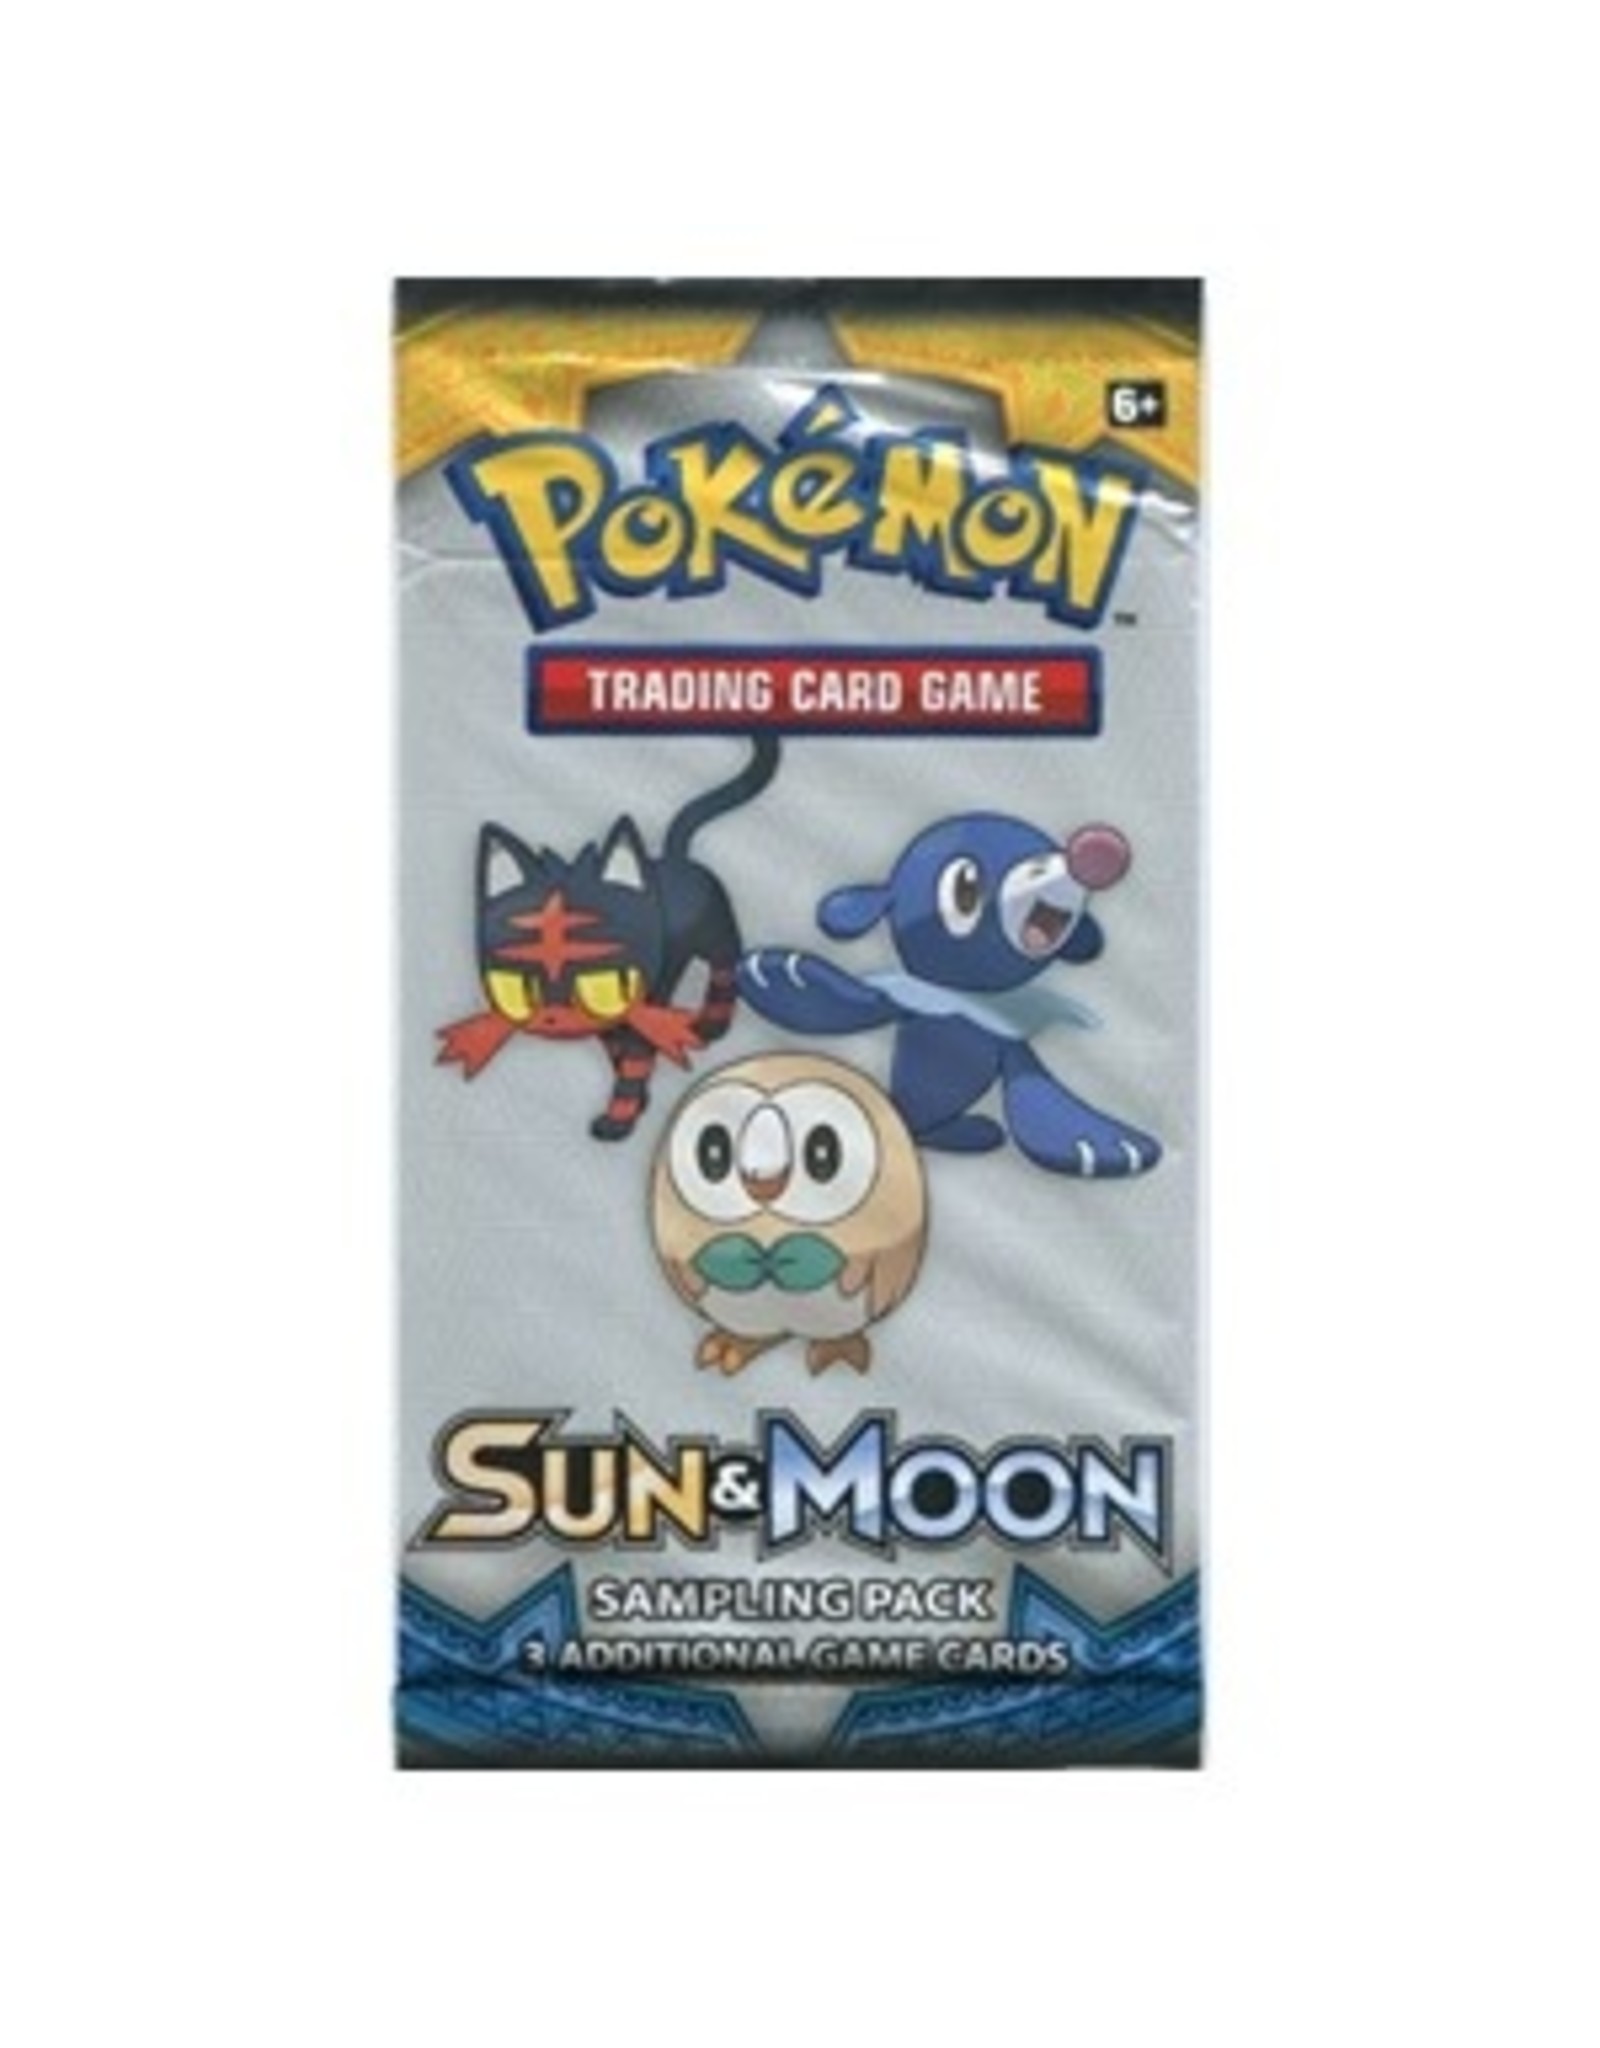 Pokémon Sun & Moon Sampling Pack